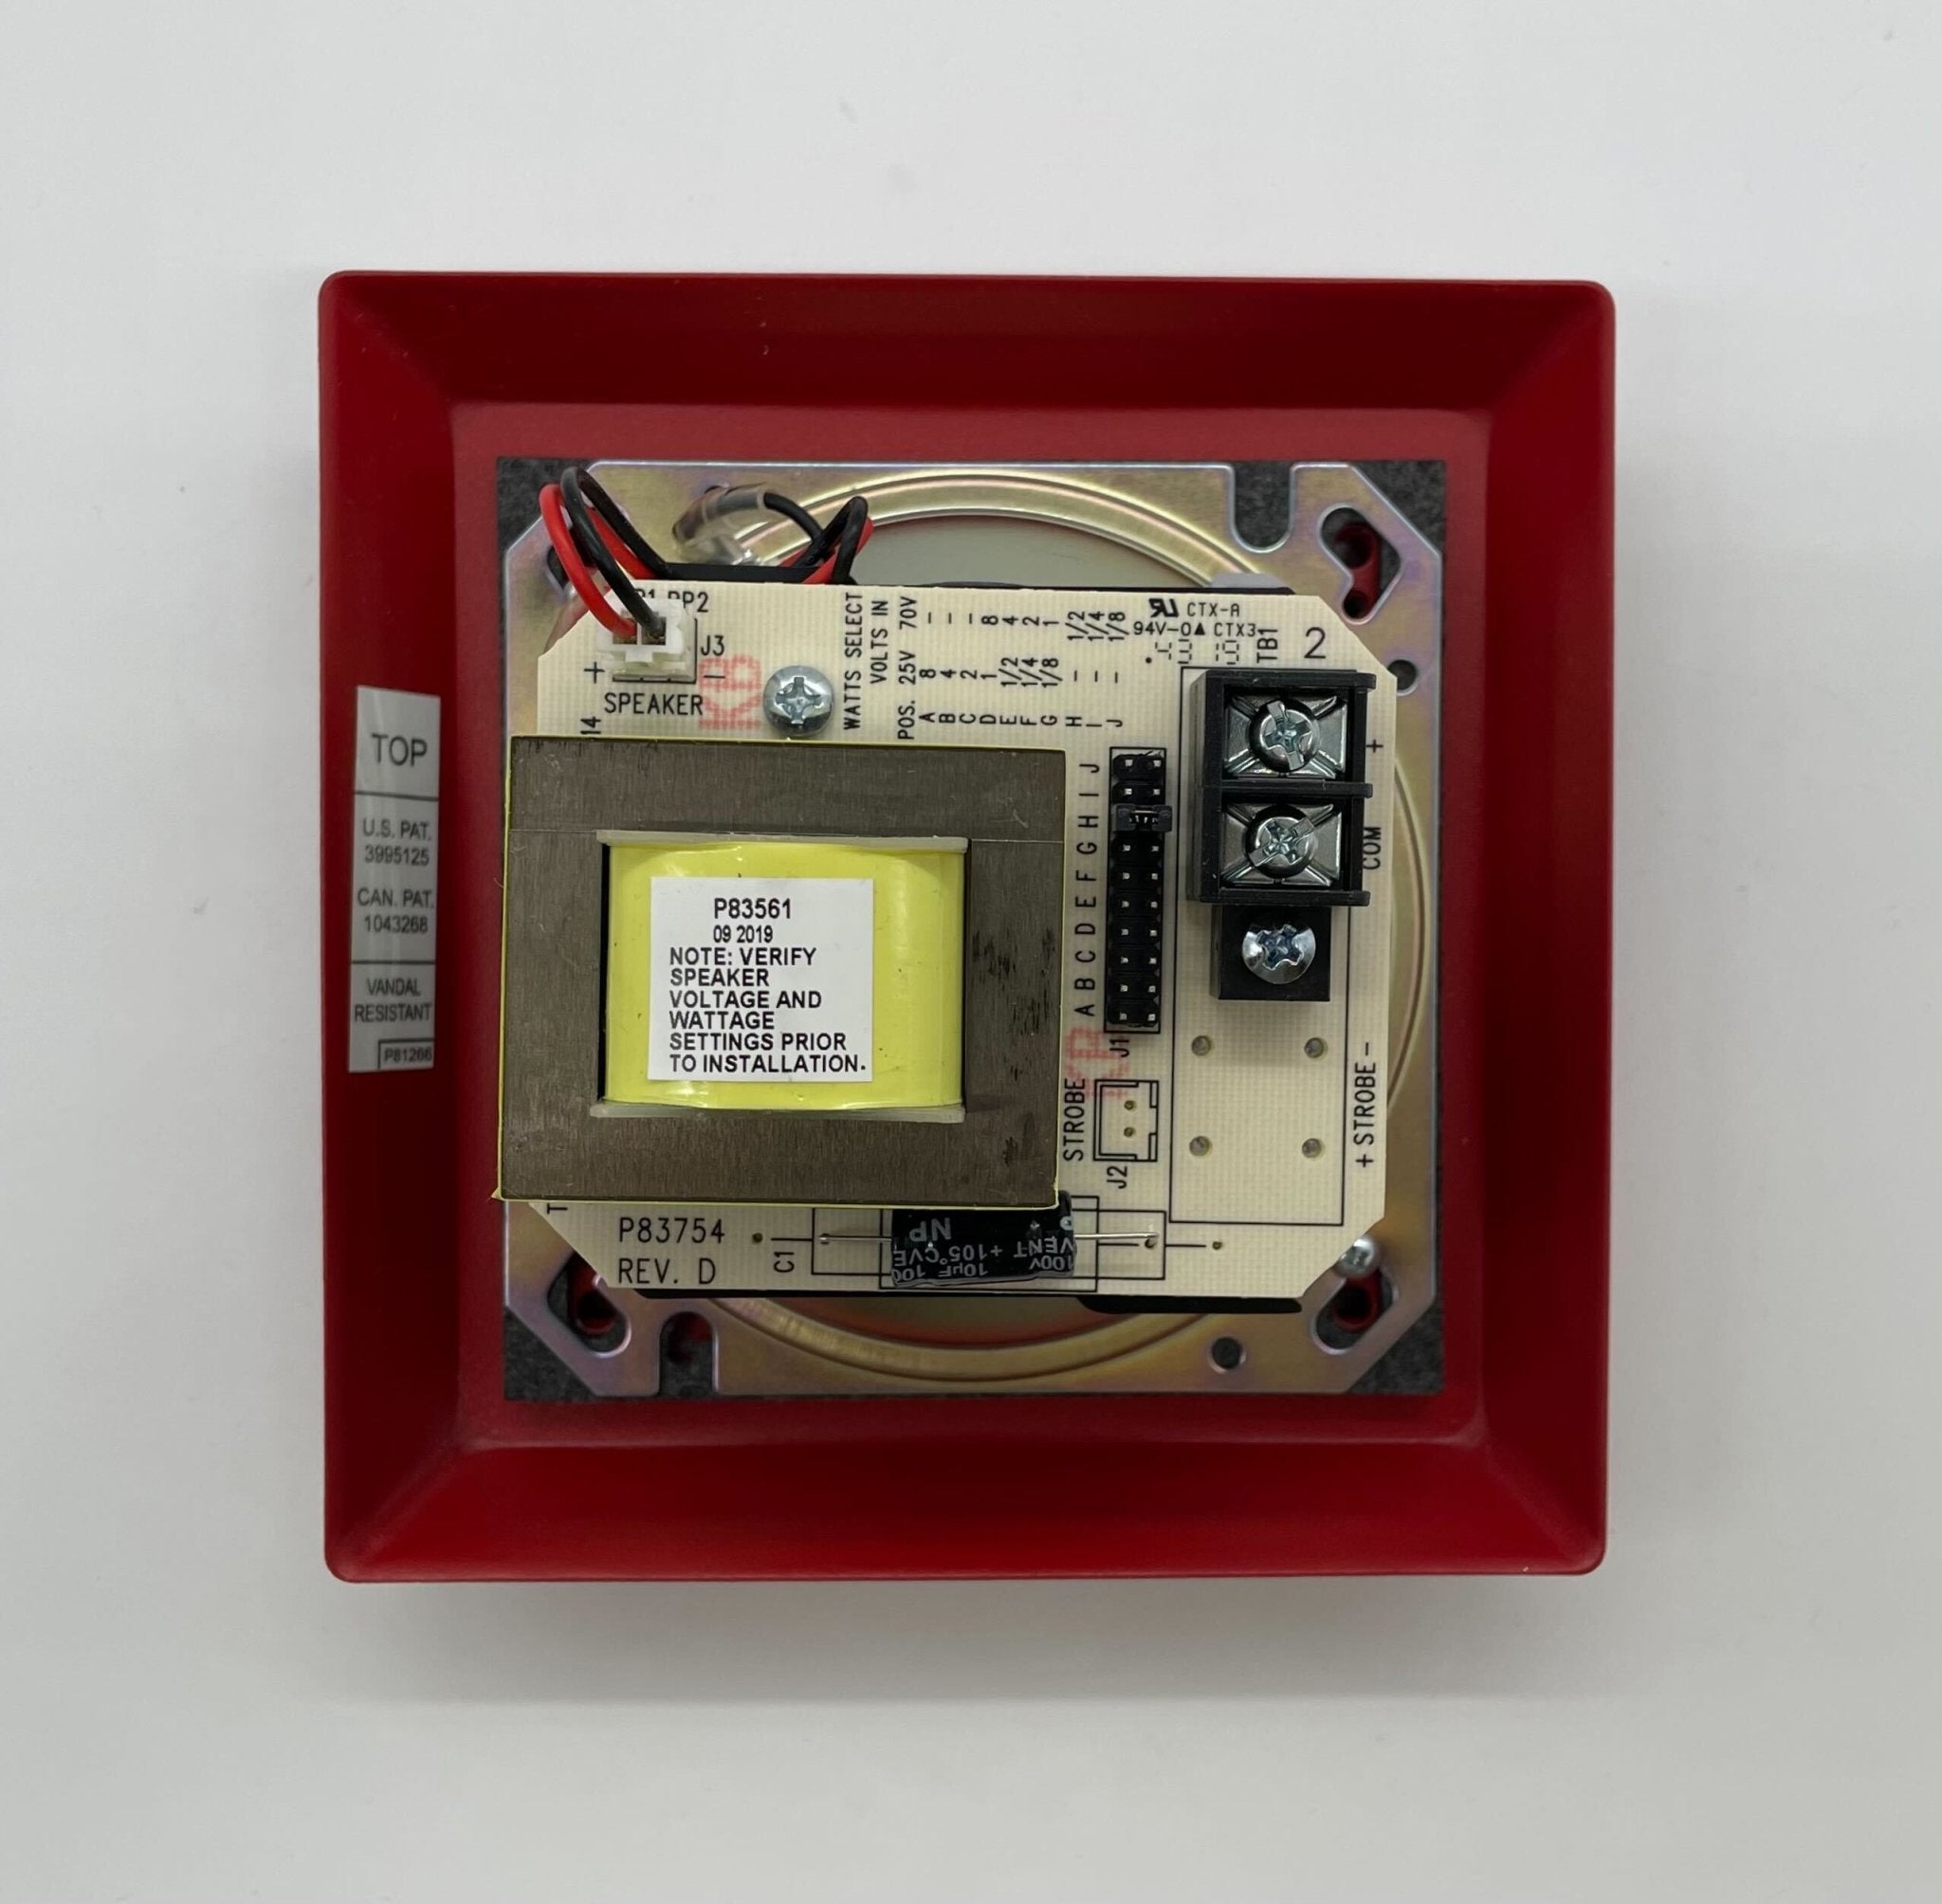 Wheelock ET-1080-R - The Fire Alarm Supplier